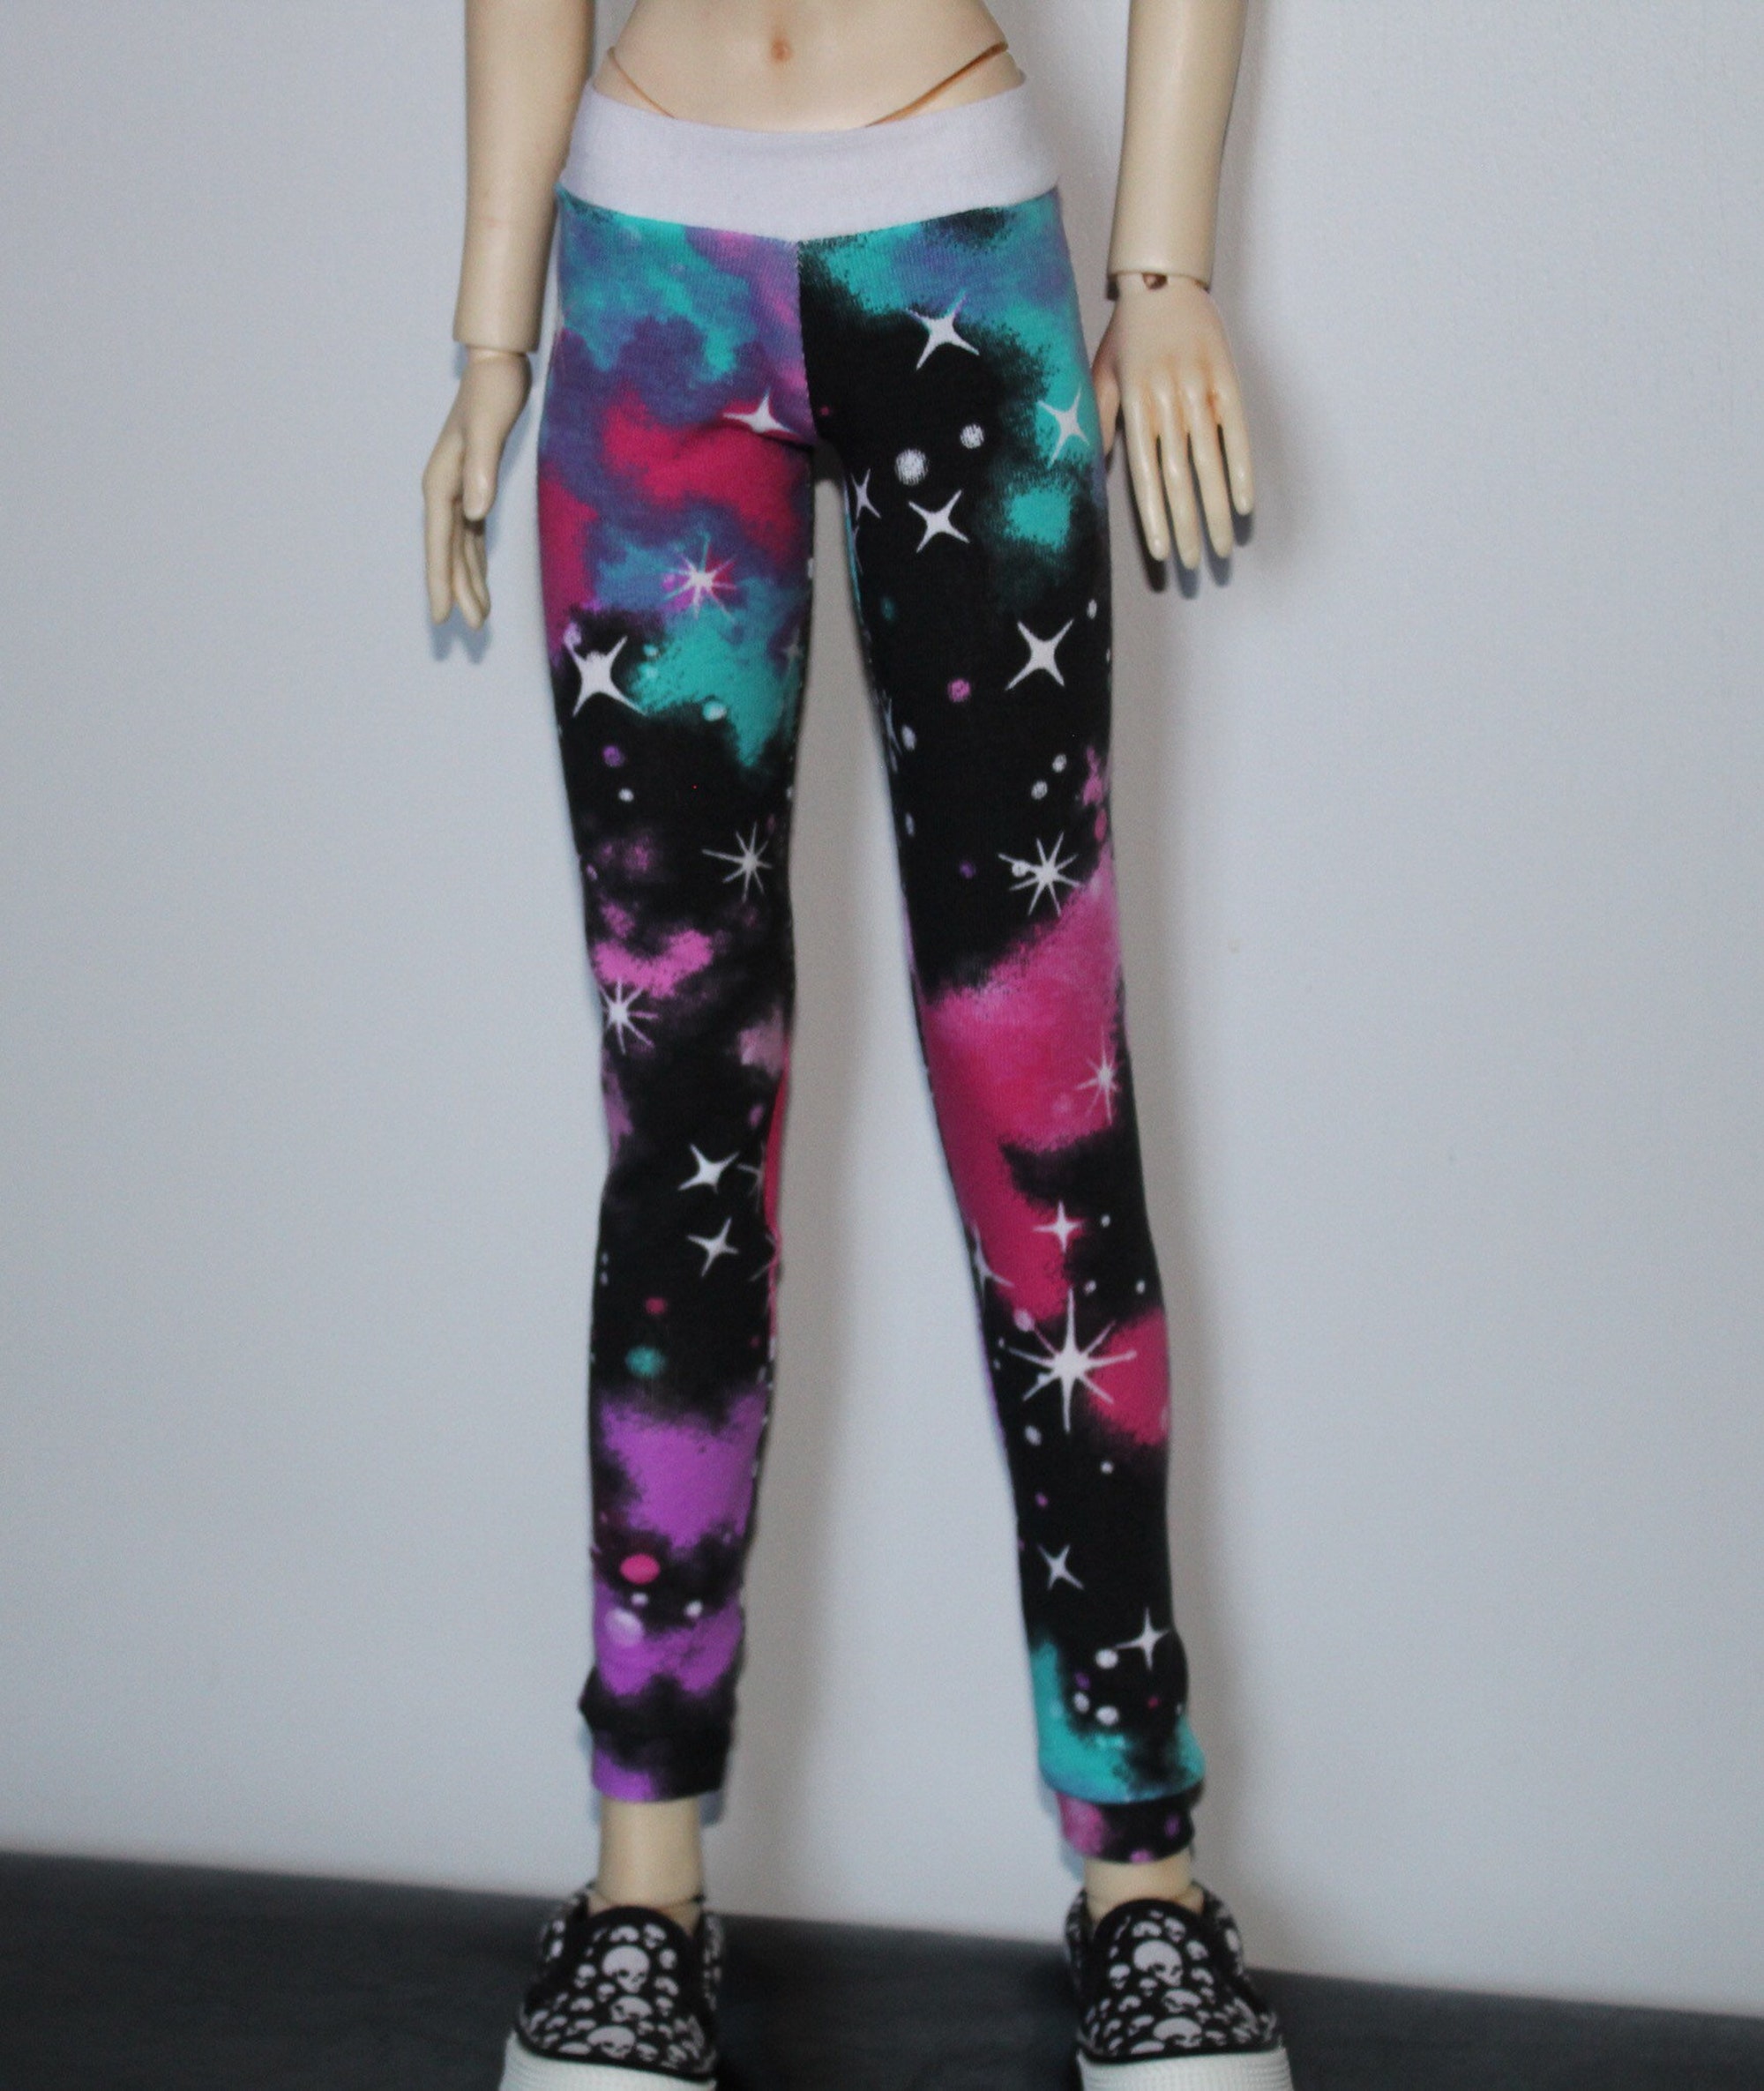 Discover Galaxy leggings